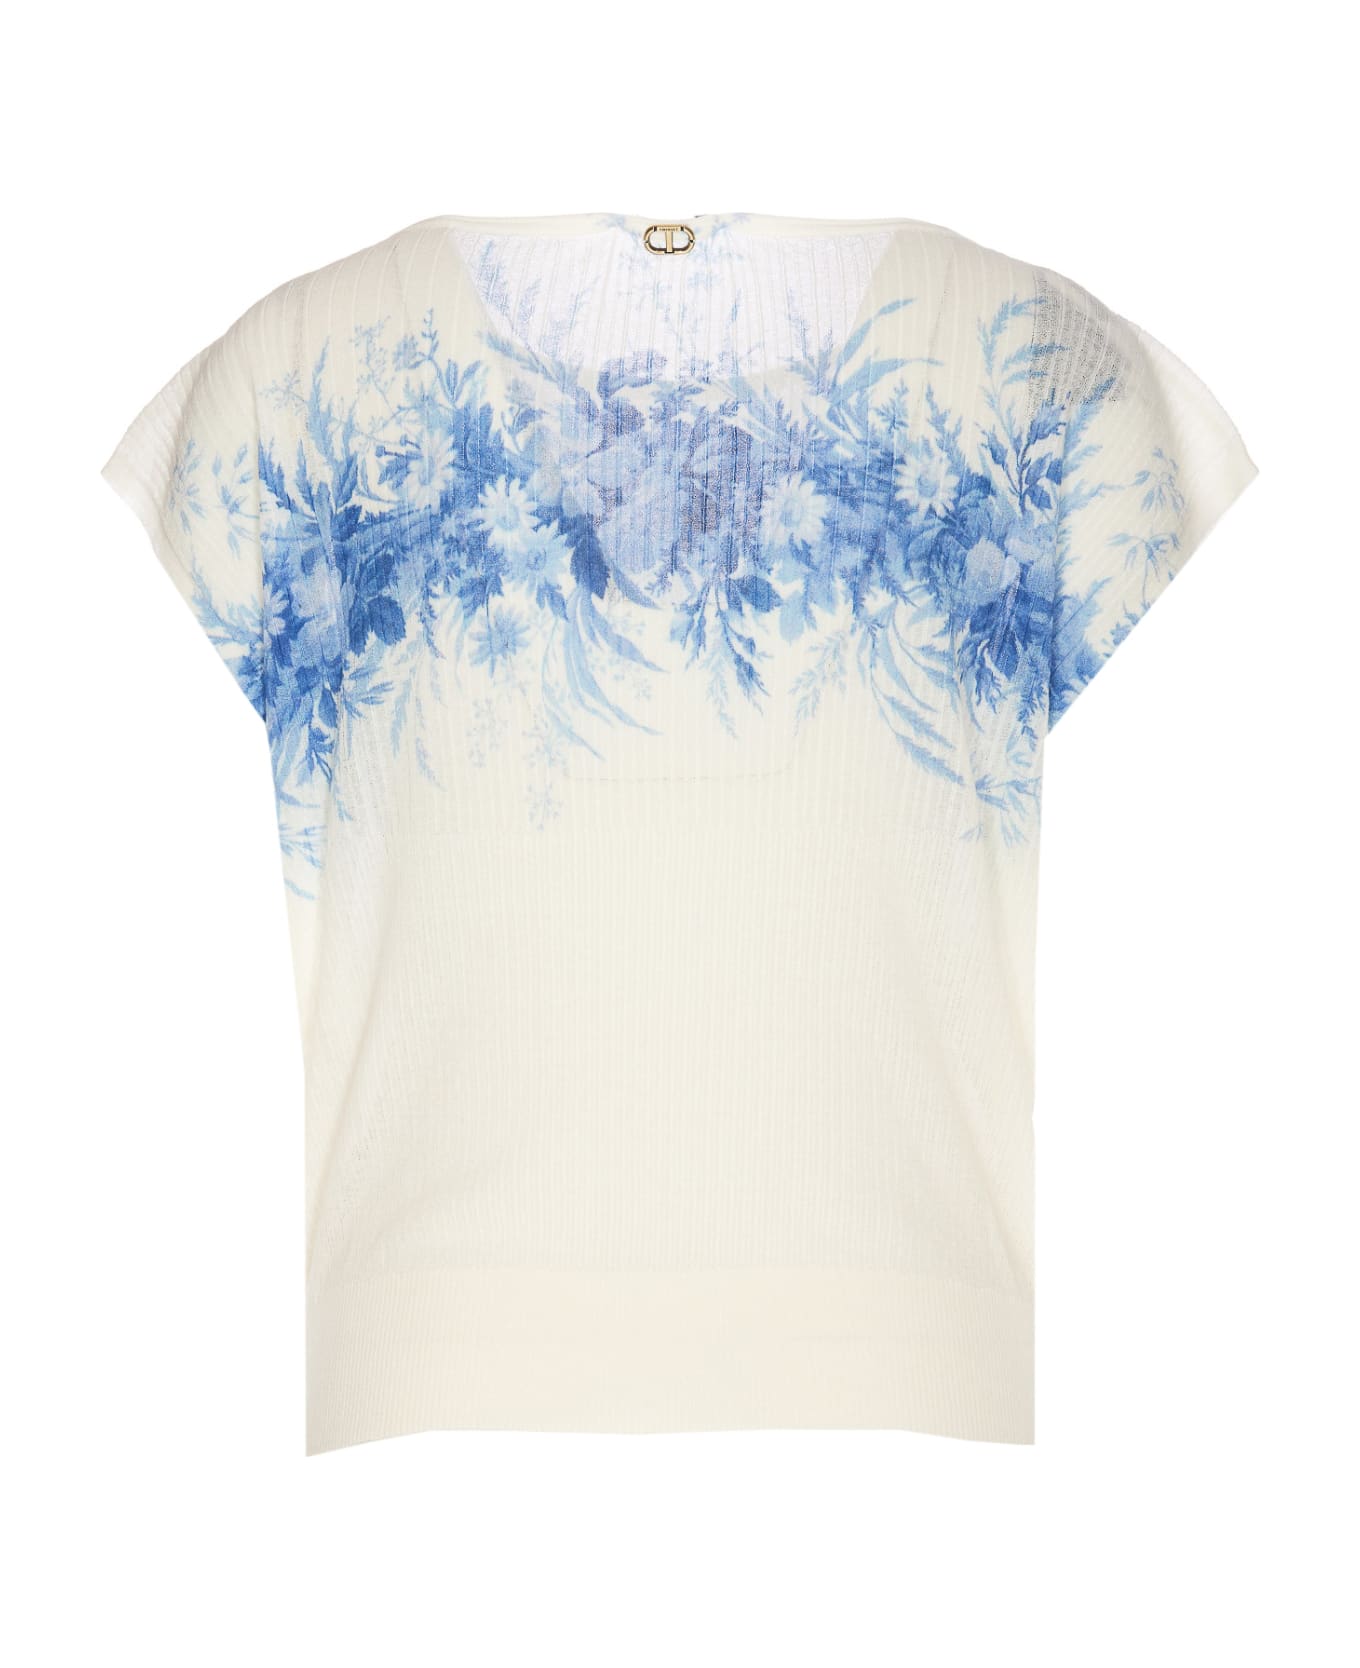 TwinSet T-shirt - Avorio/blue